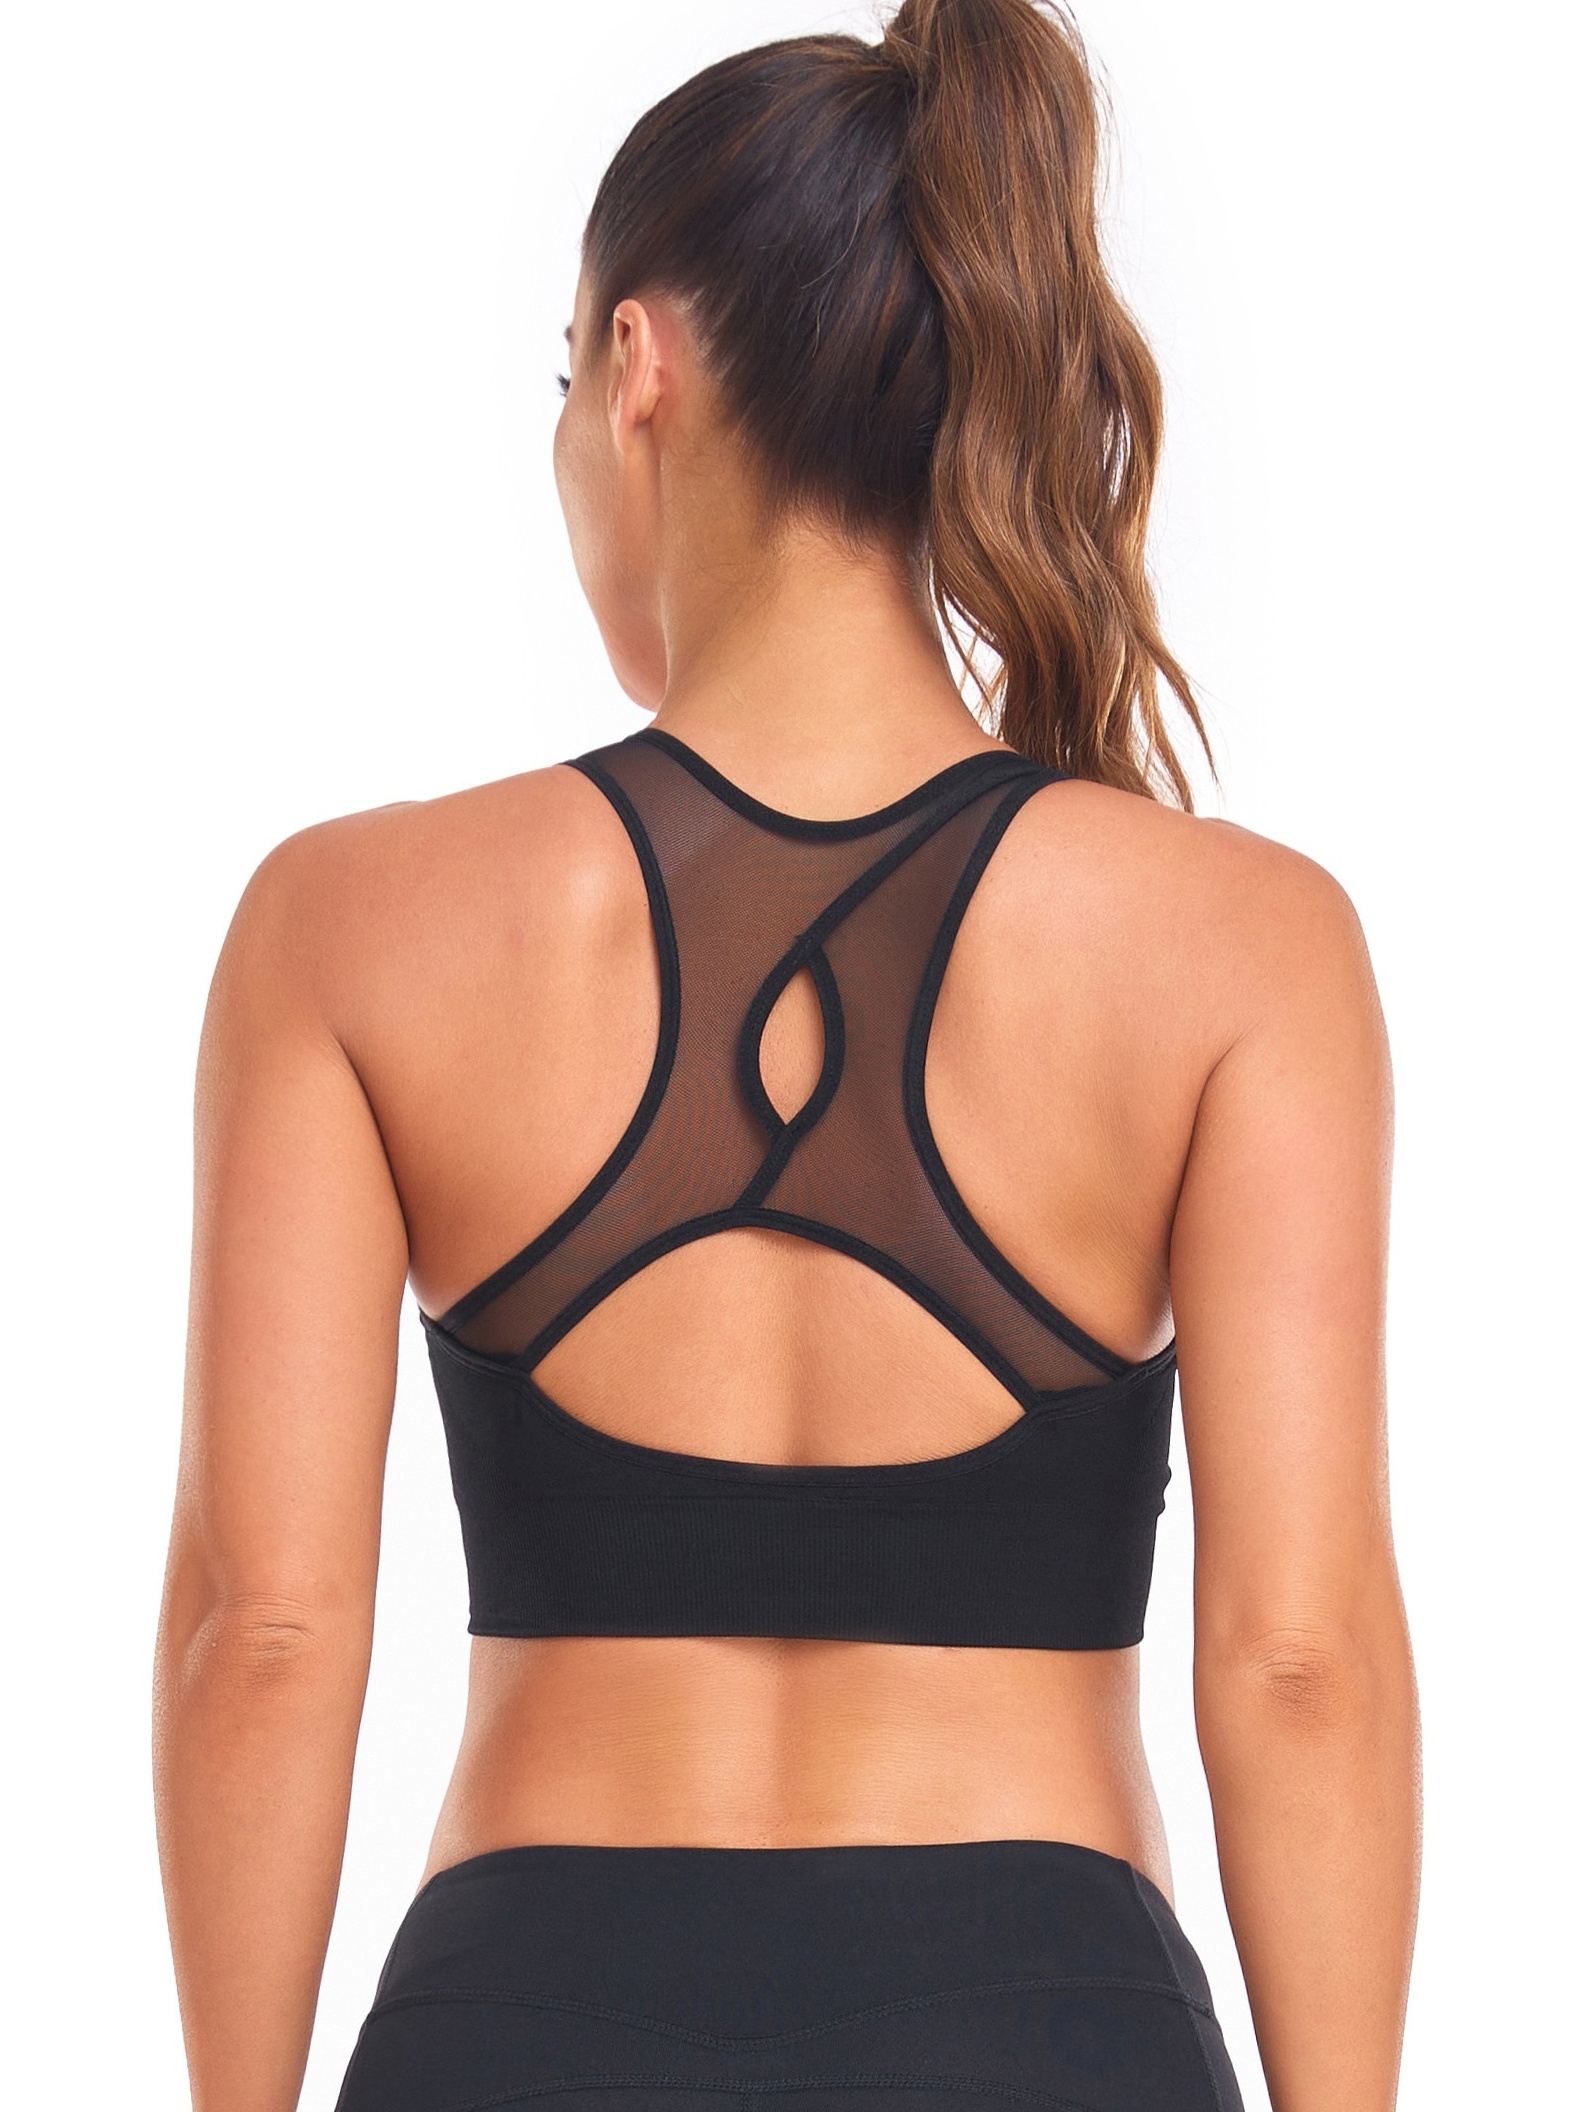 Women's Sports Bra Yoga Tops Open Back Hollow Out Training Vest